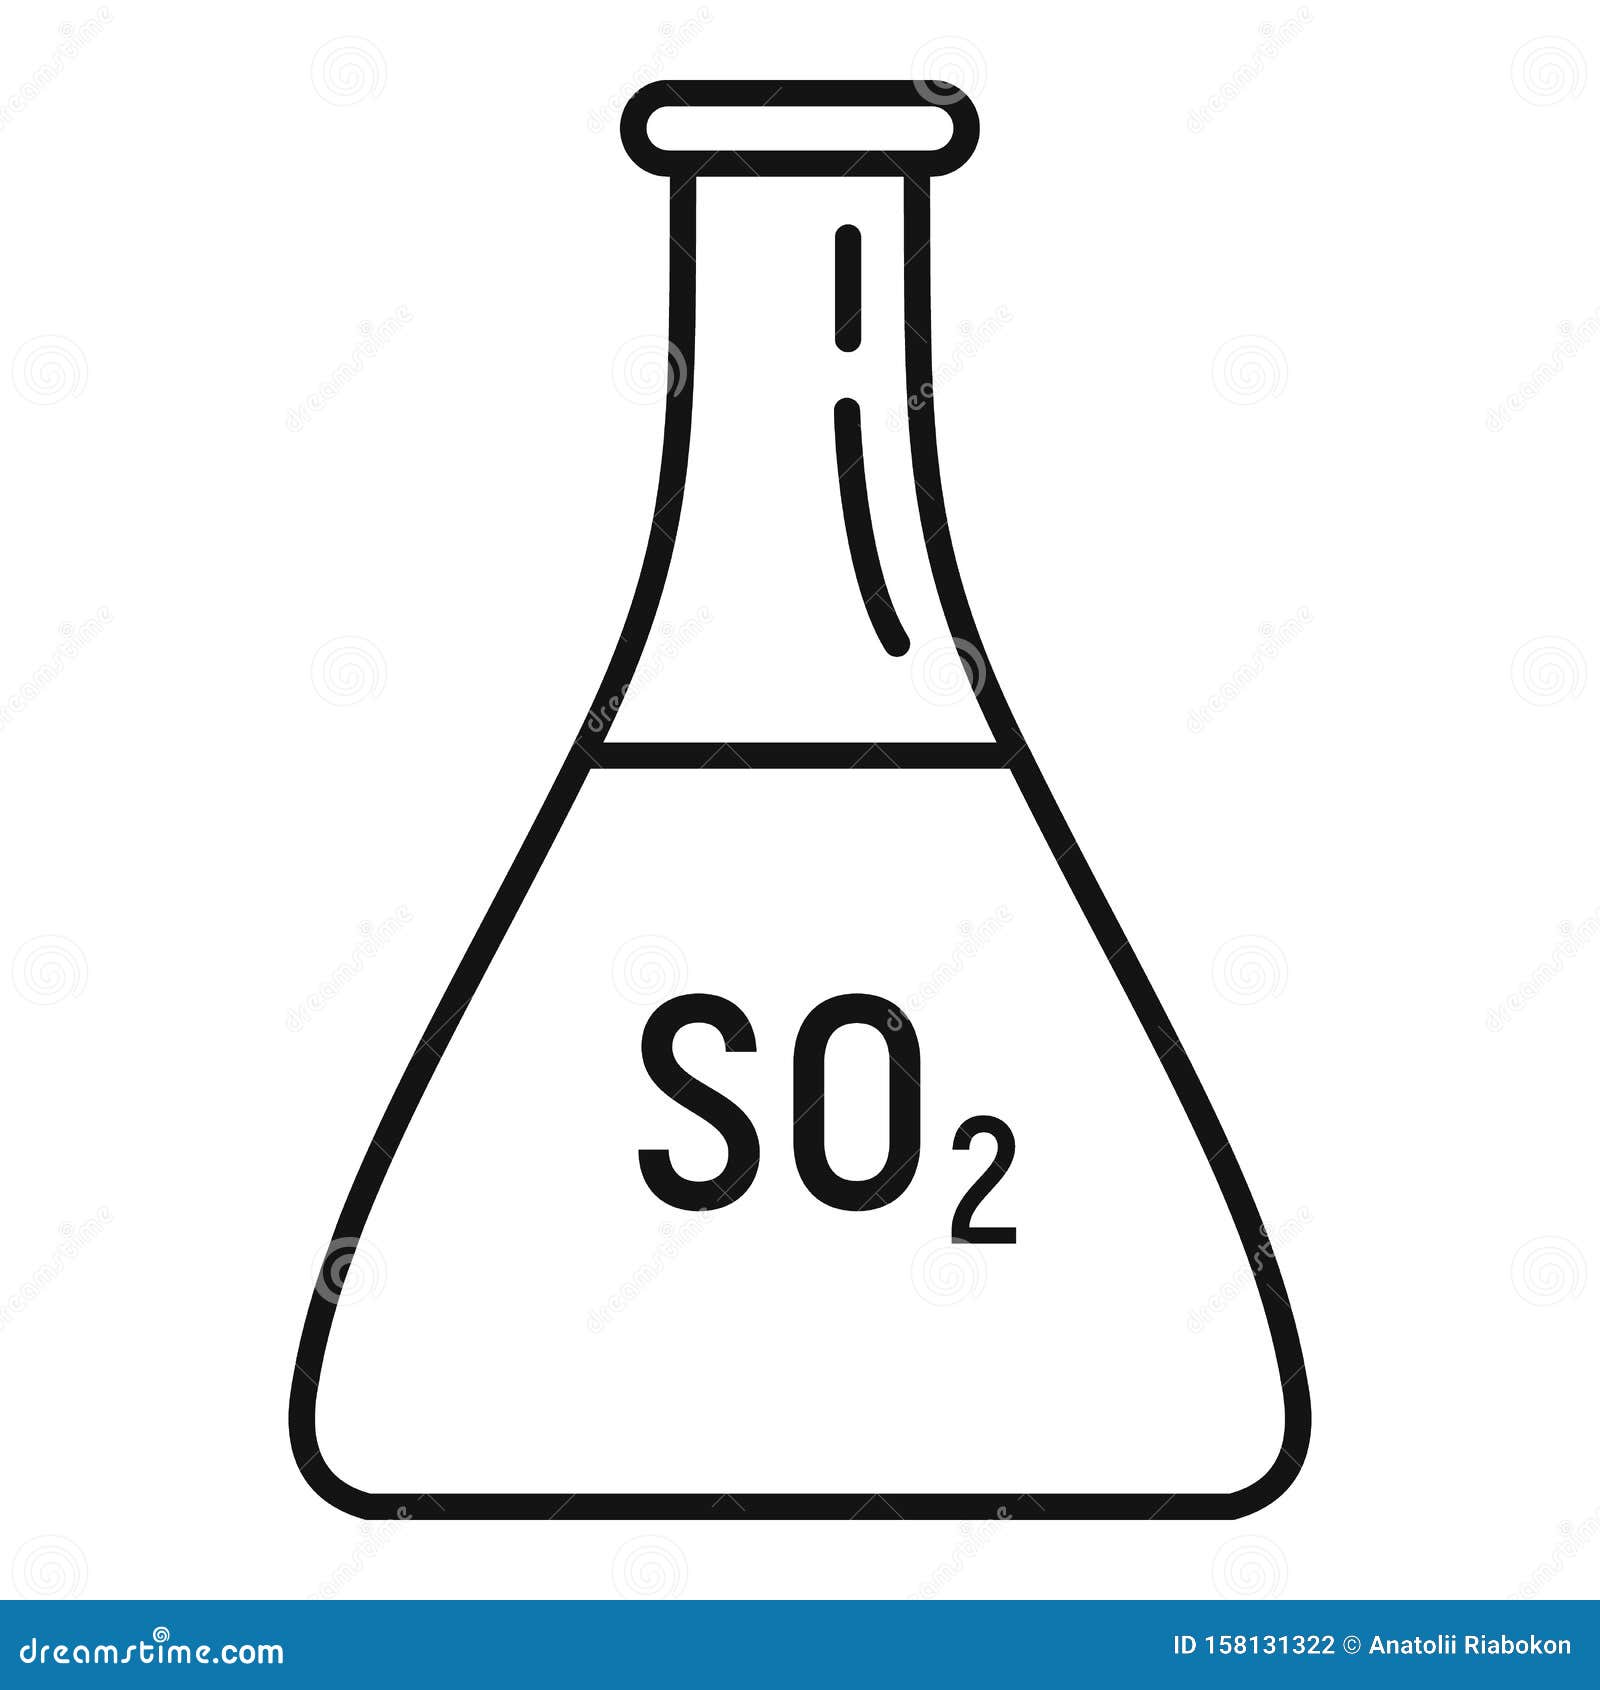 SO2 Sulfur Dioxide Molecule Cartoon Vector | CartoonDealer.com #64274365